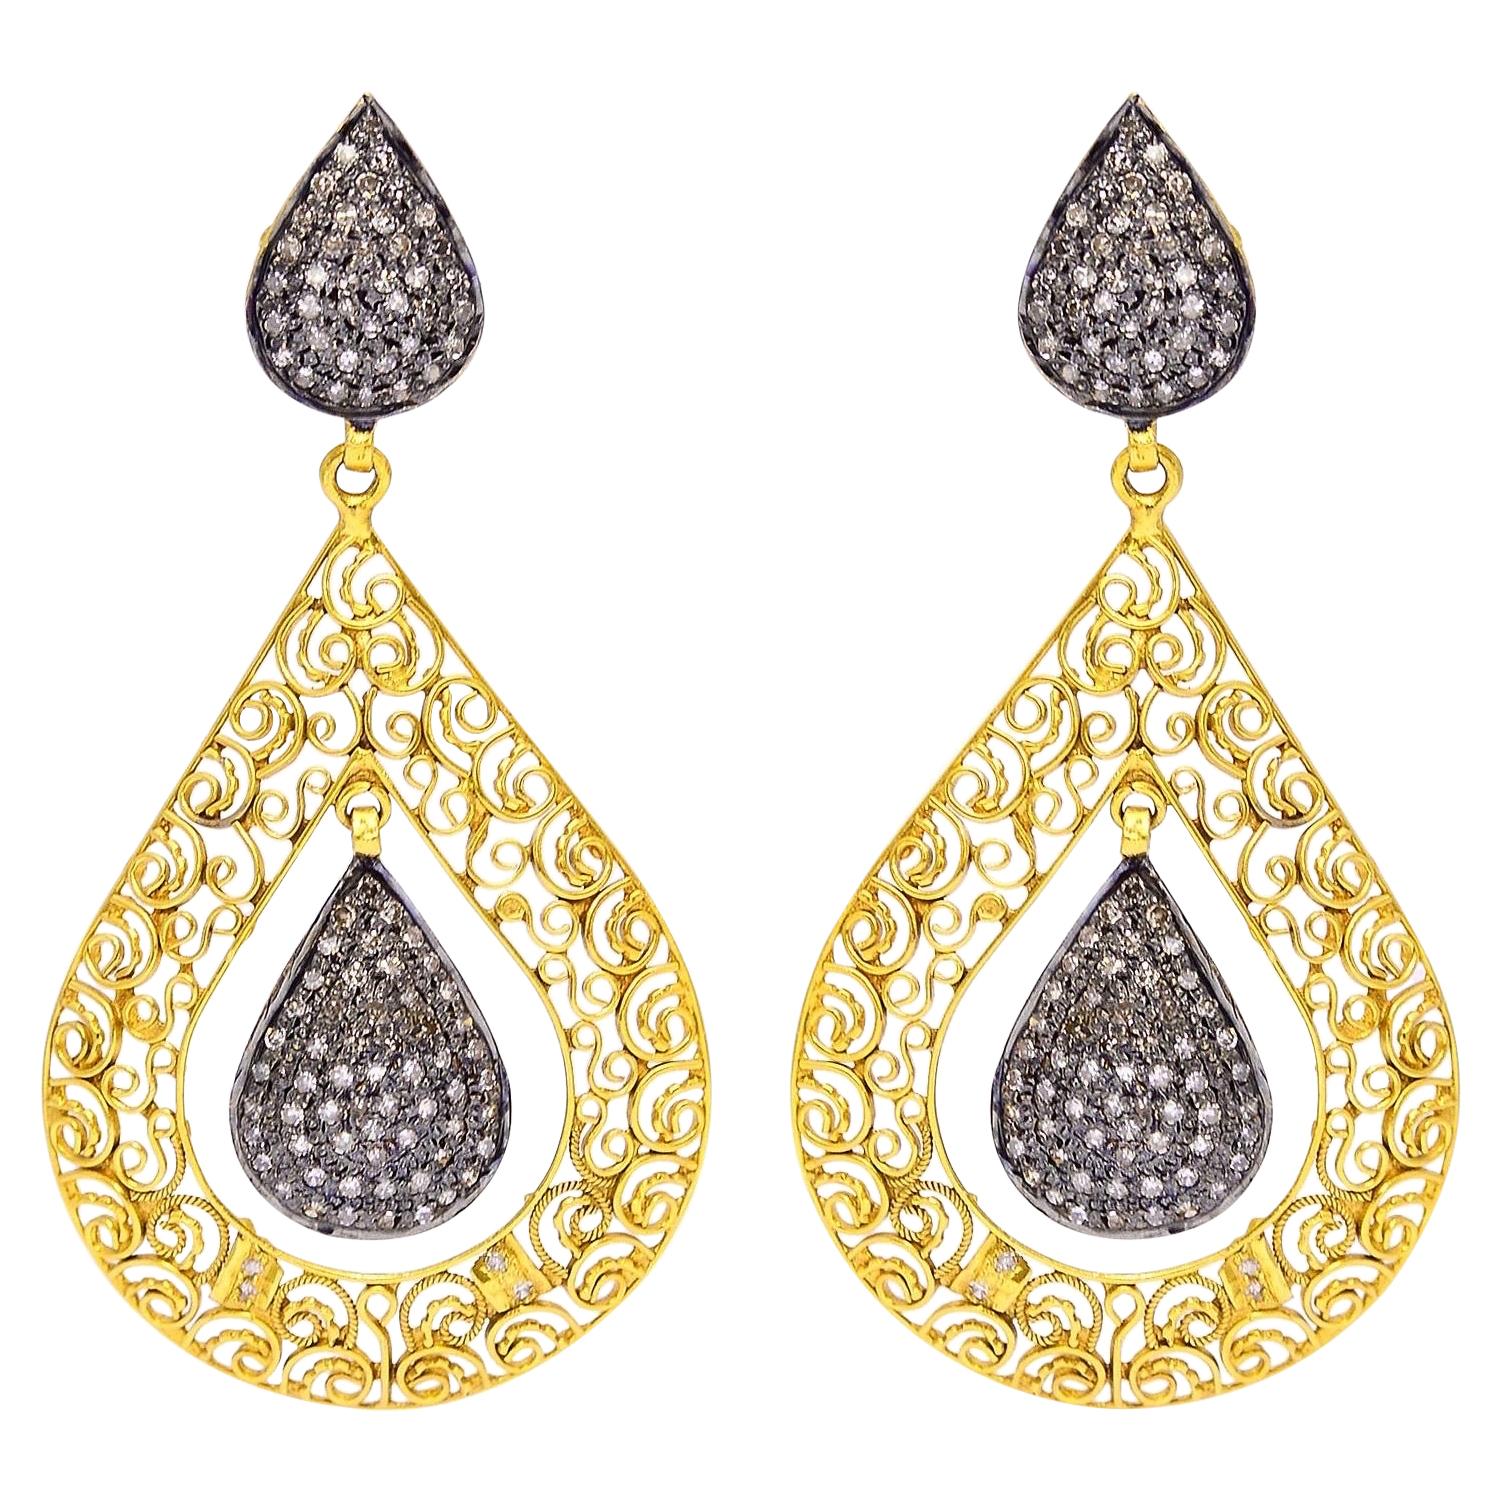 Zweifarbige Diamant-Ohrringe aus 18 Karat Gold mit filigranem Diamant